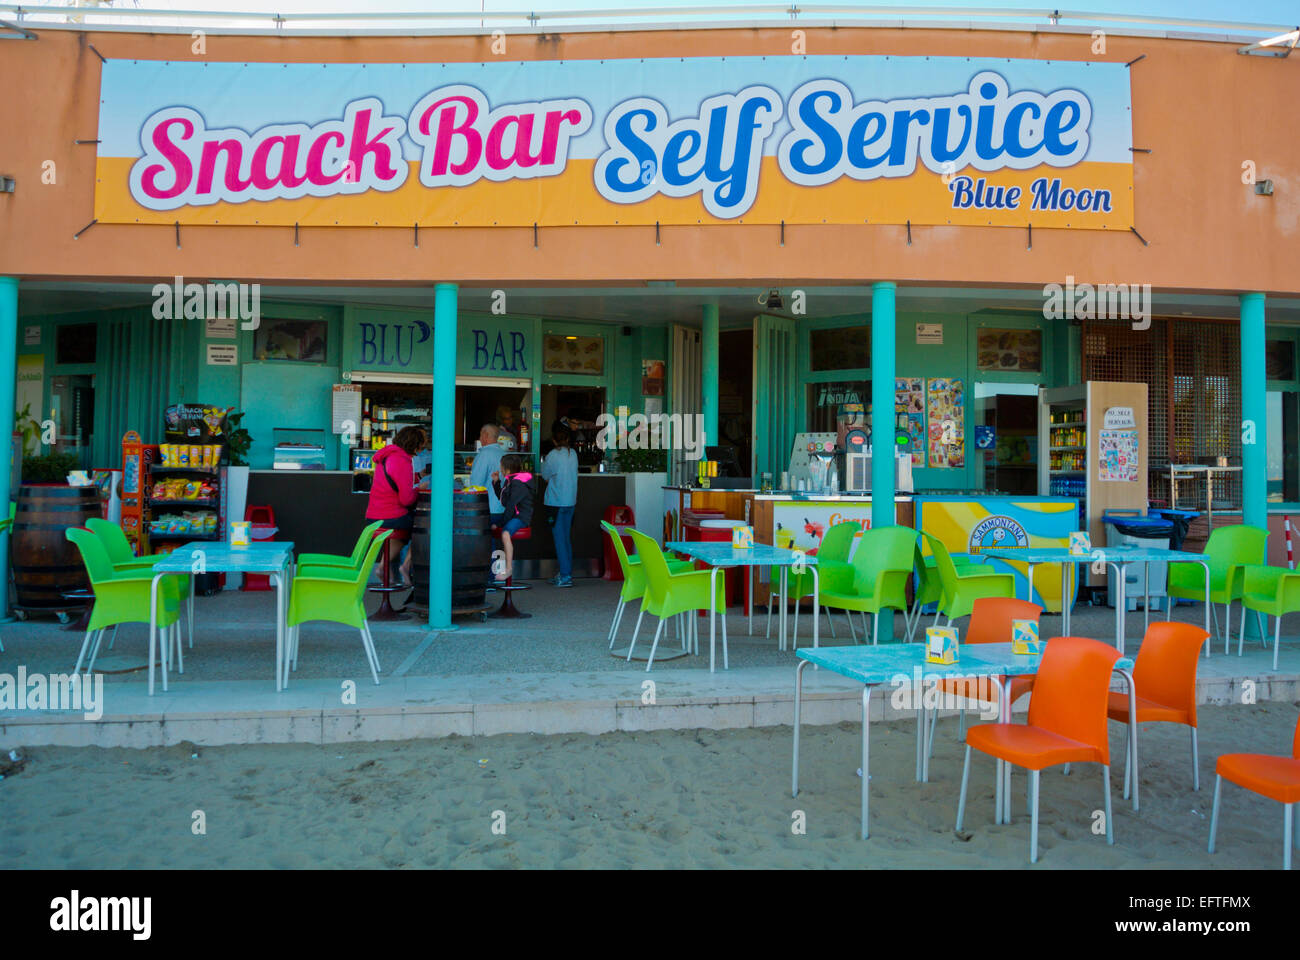 Self service restaurant, snack bar, Blue Moon beach, Lido, Venice, Italy Stock Photo